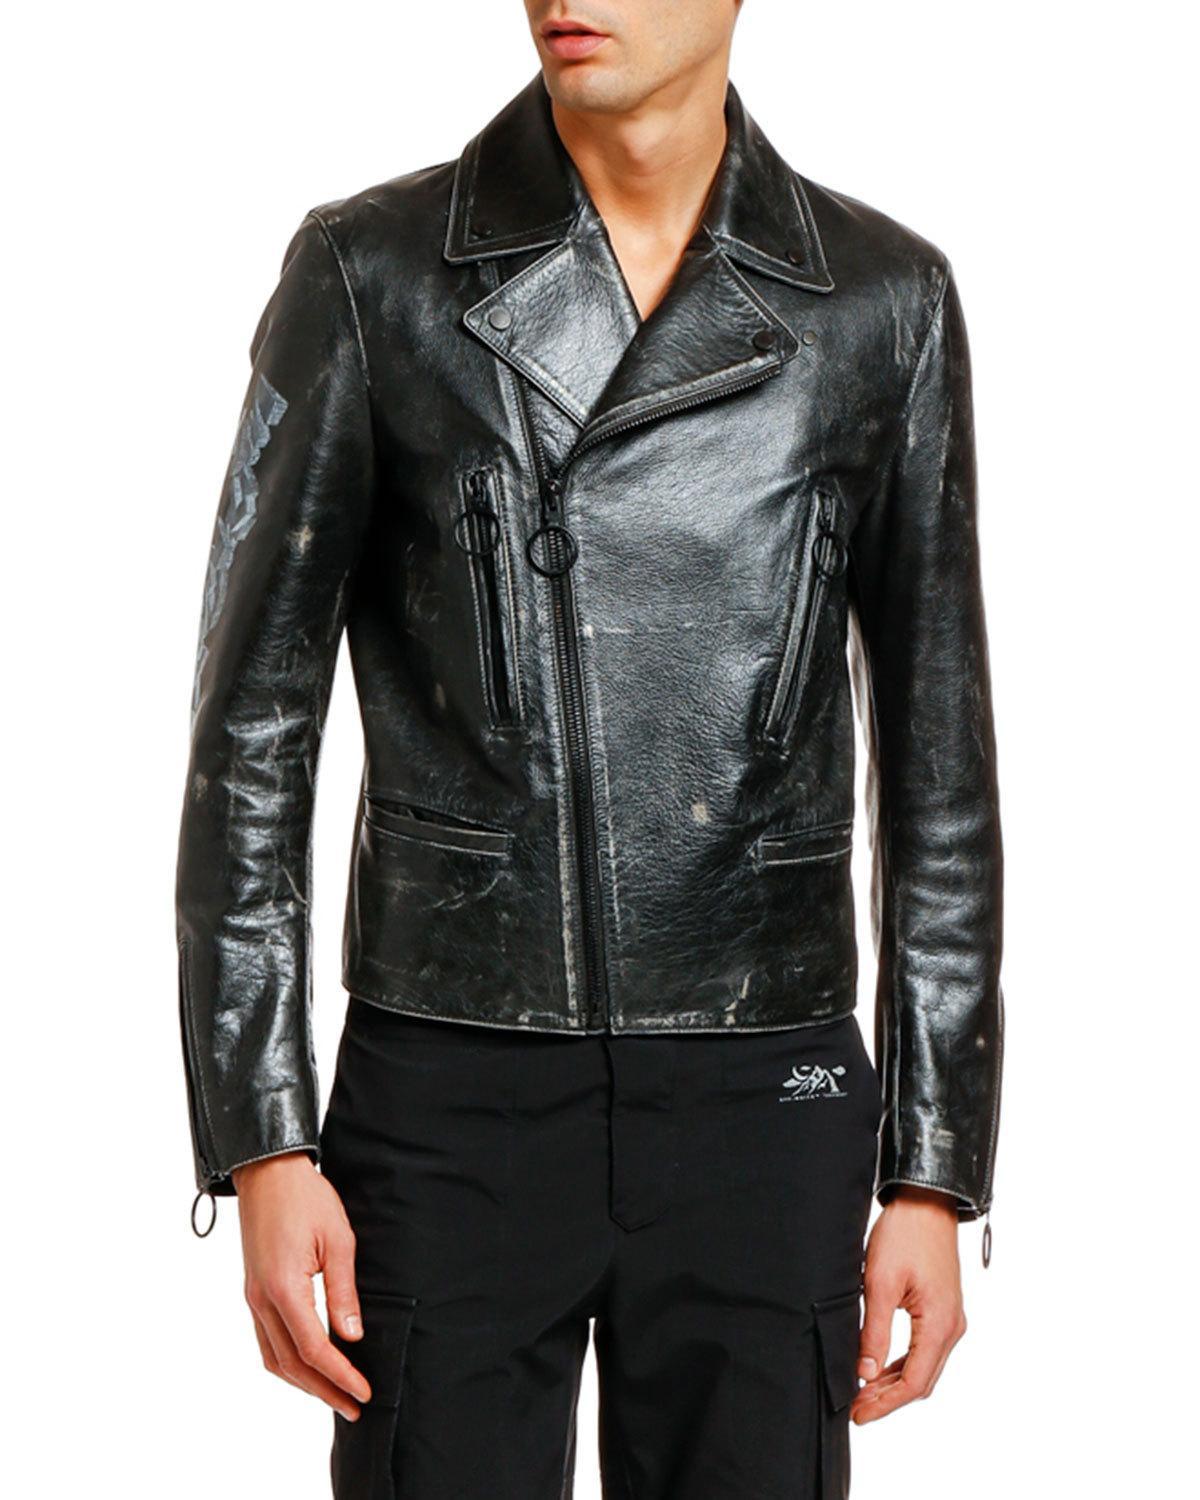 Off-White c/o Virgil Abloh Arrow Biker Jacket in Black for Men